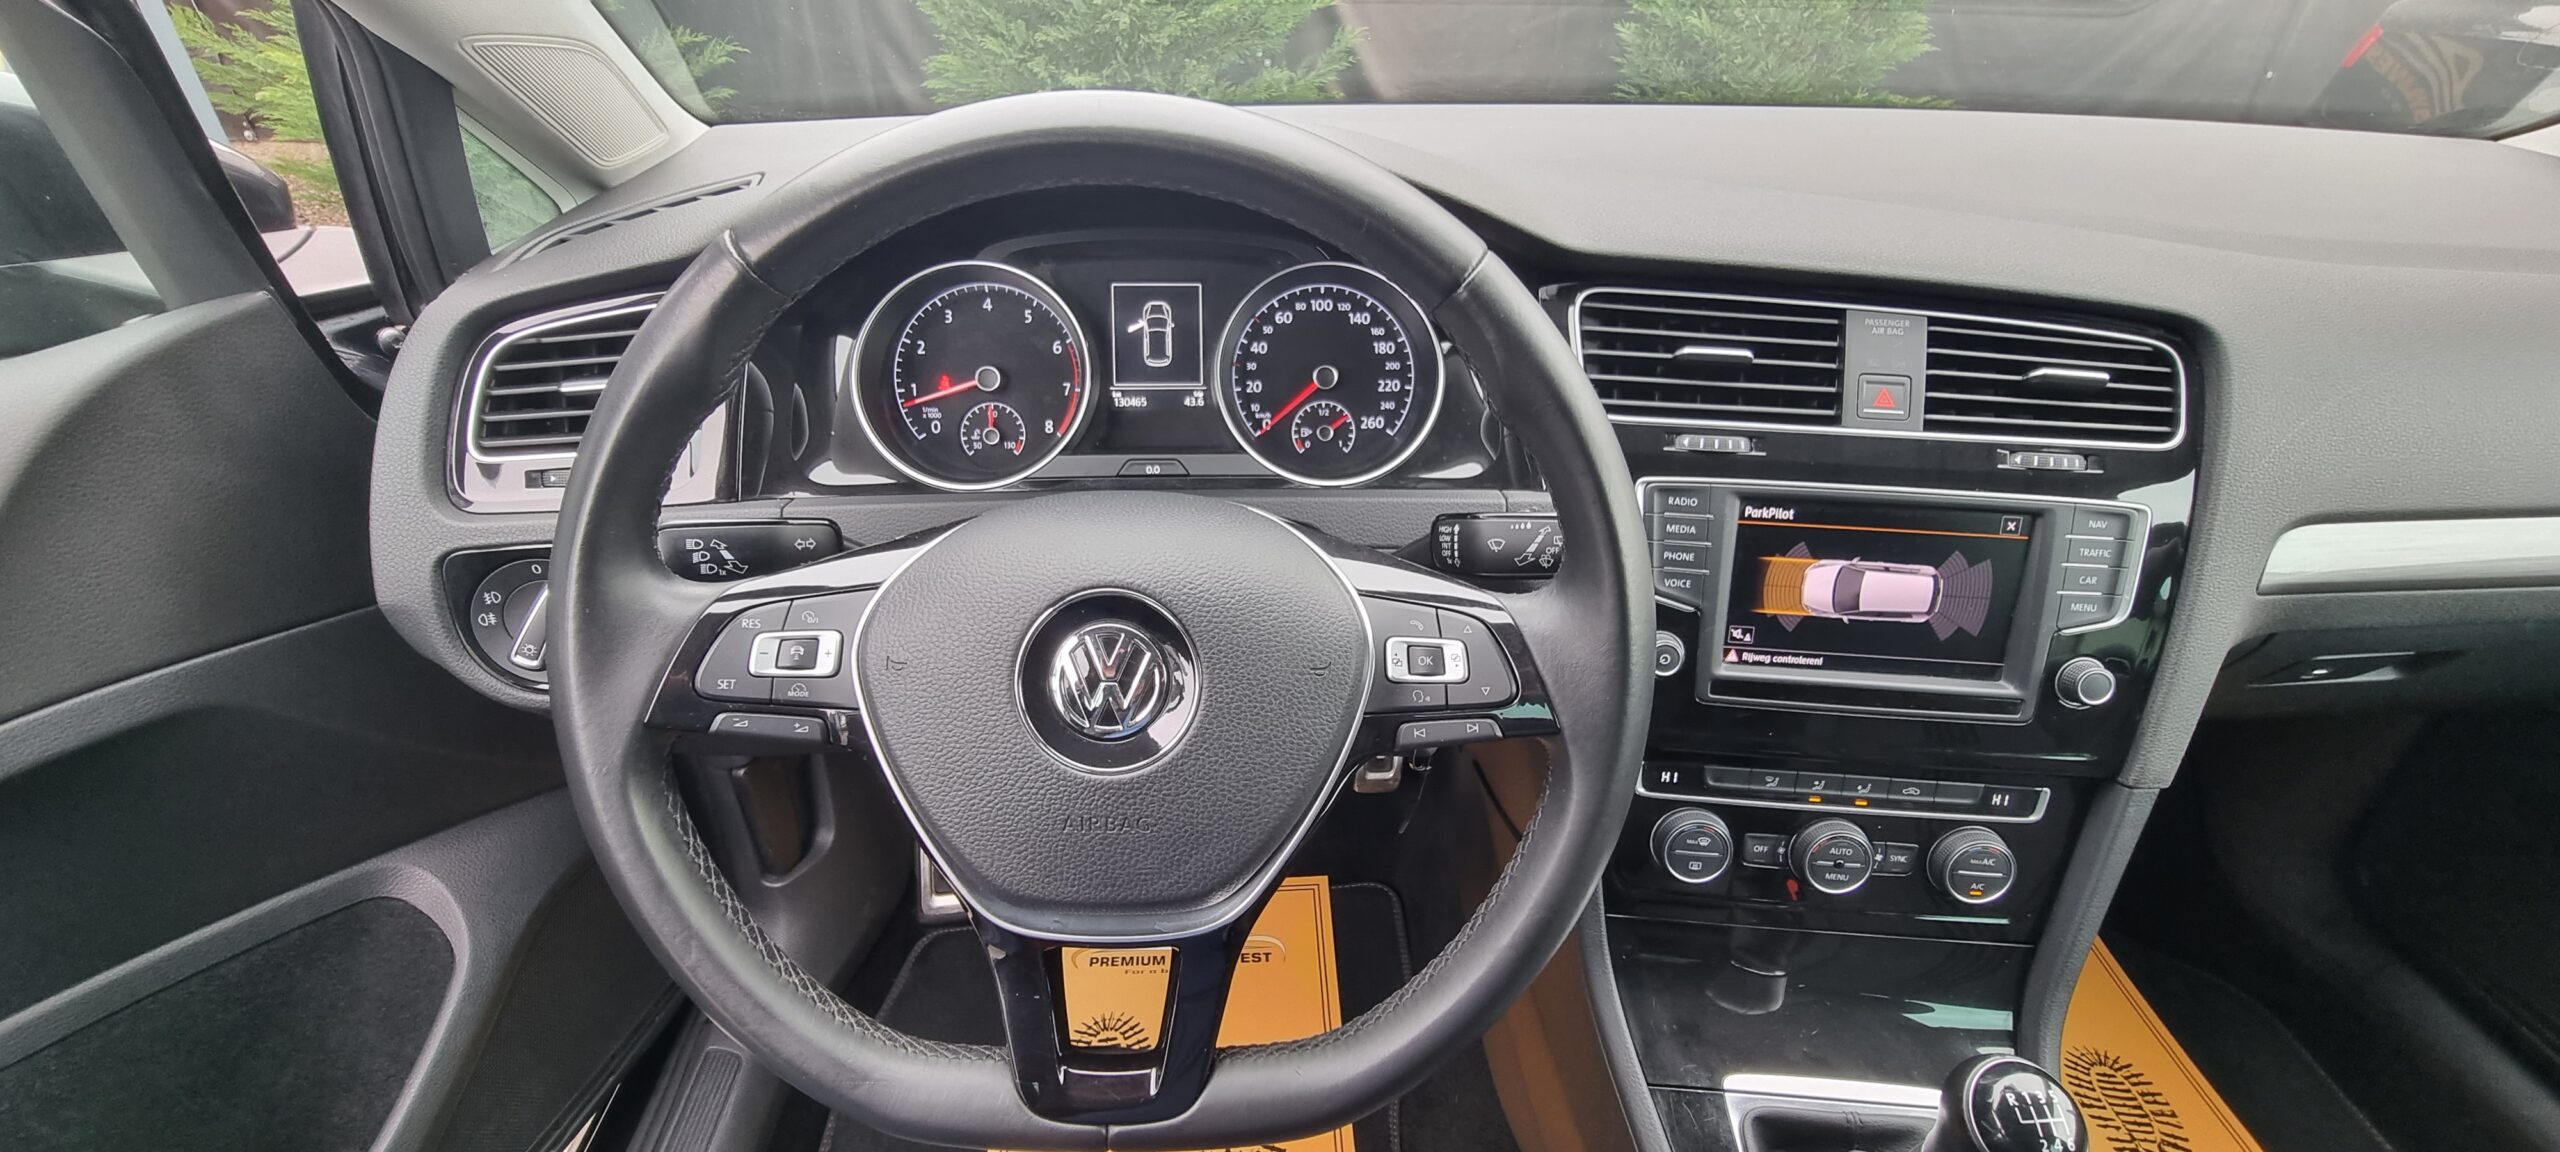 VW GOLF 7 ALLSTAR, 1.4 BENZINA, 125 CP, EURO 6, AN 2016